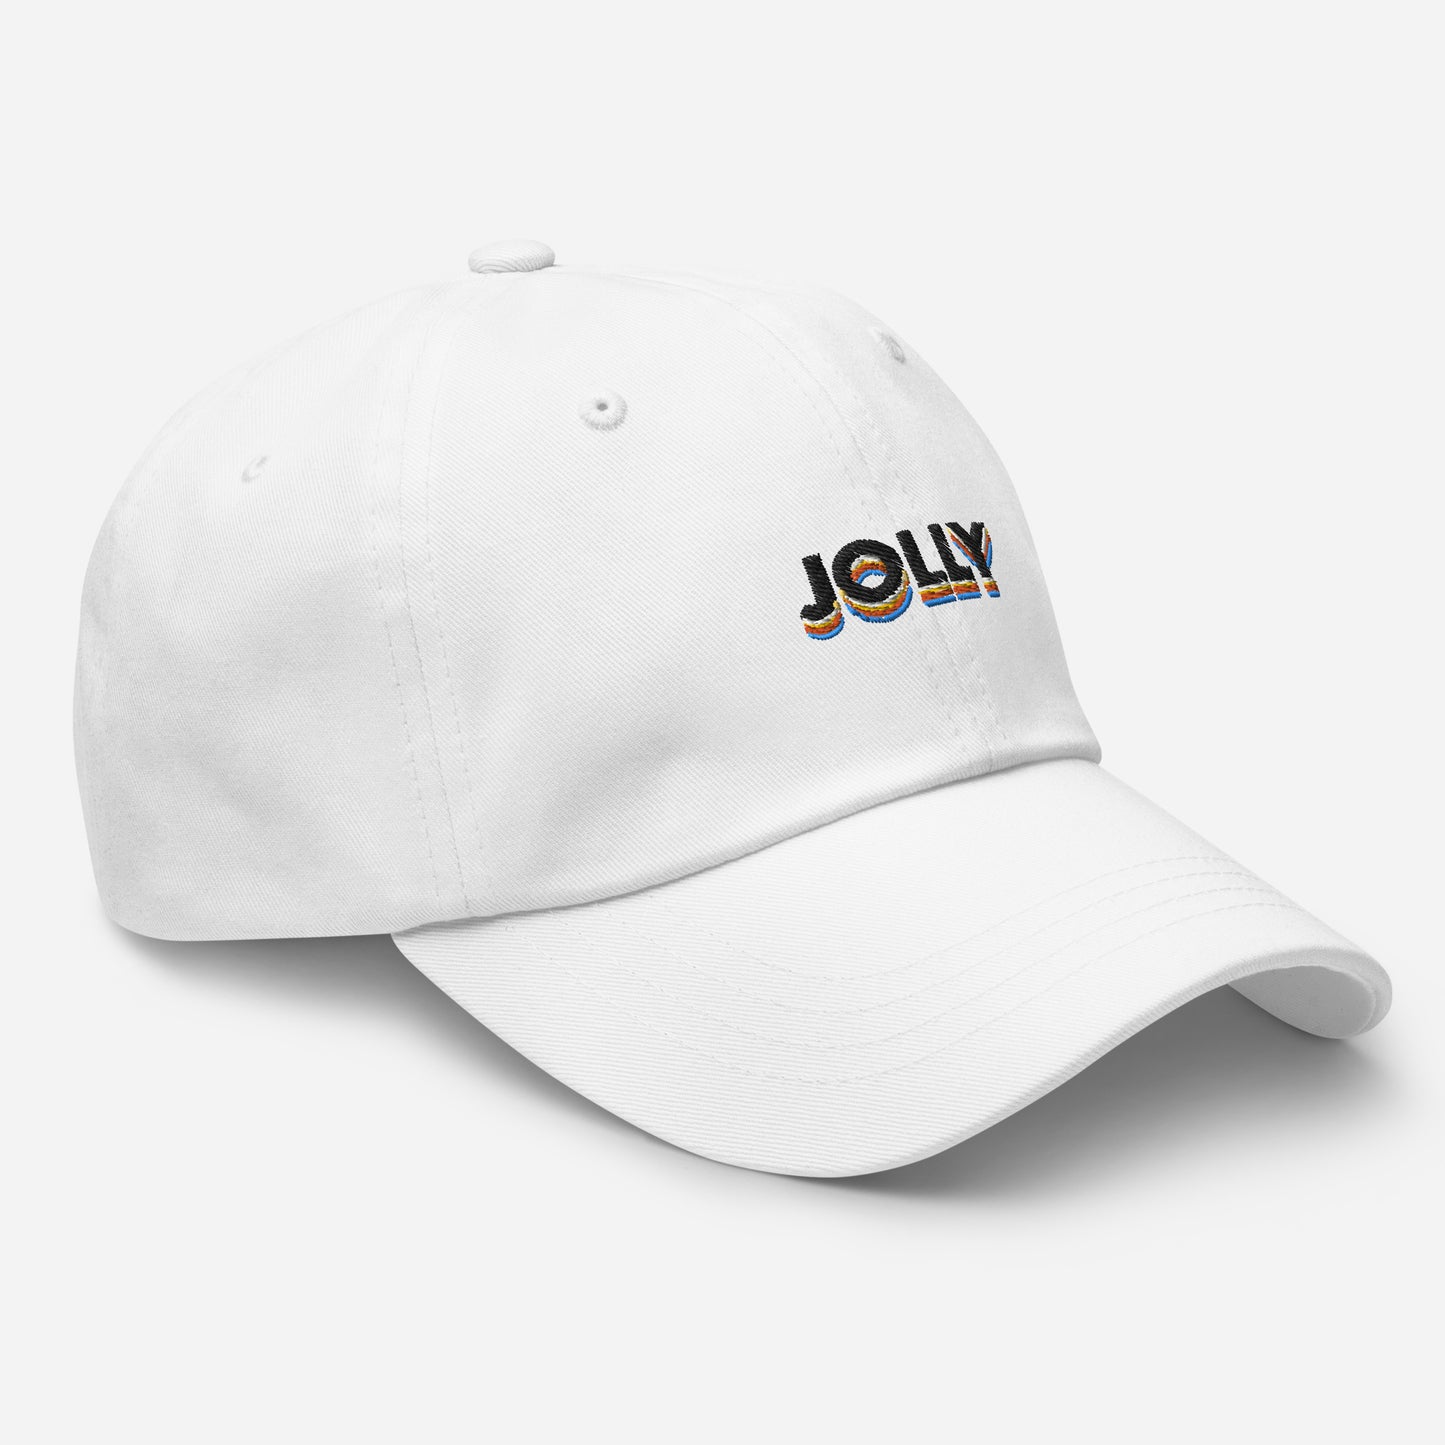 JOLLY Hat